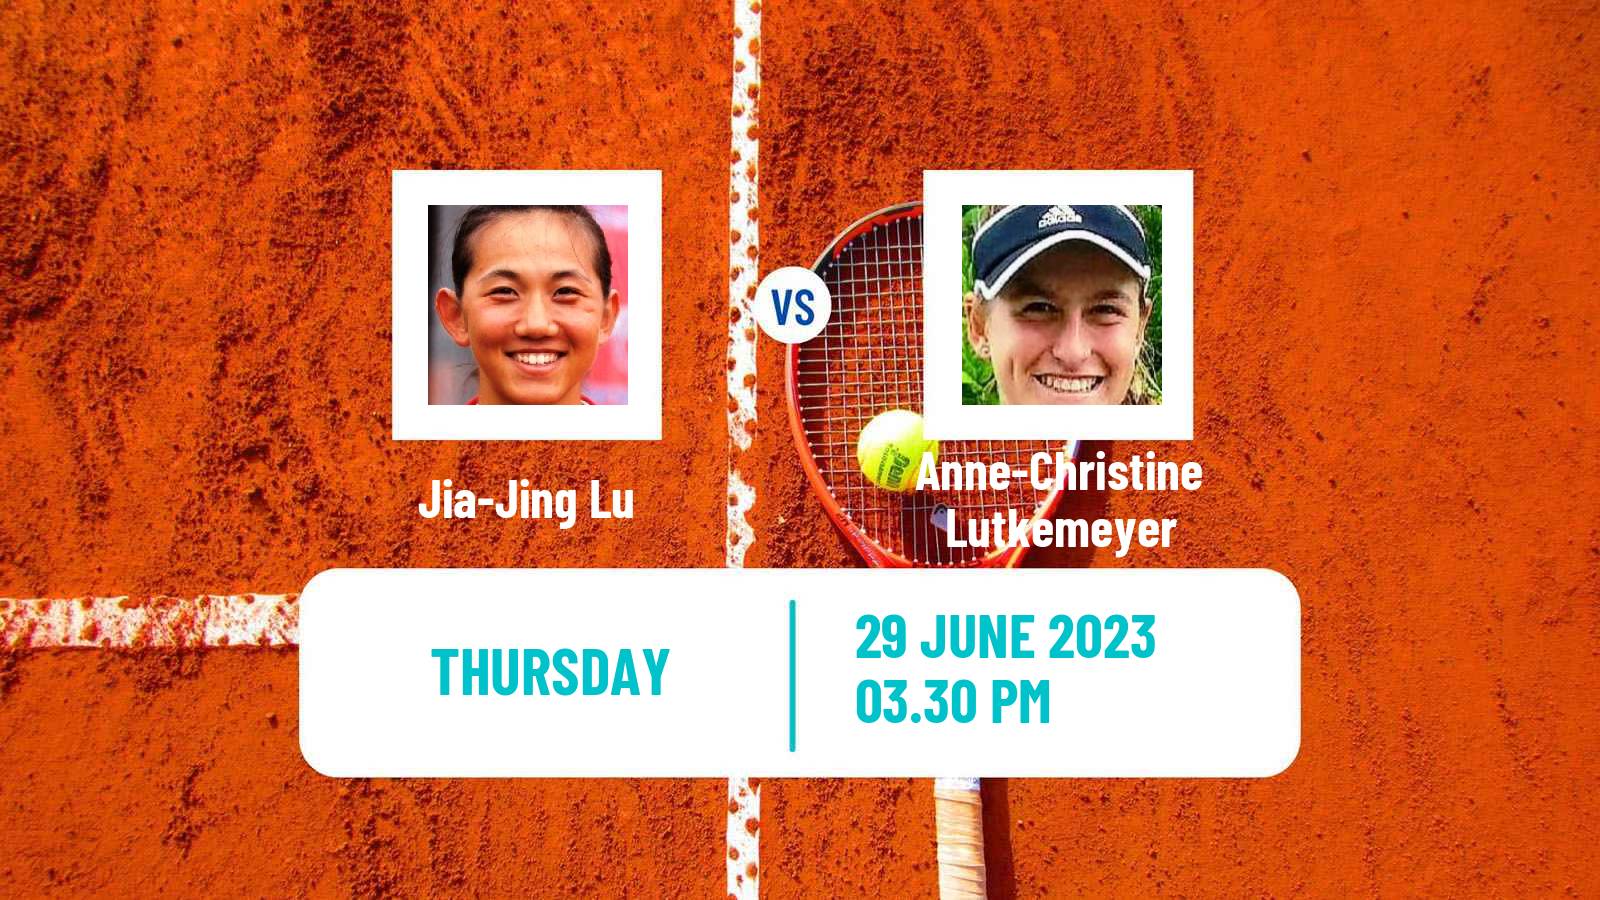 Tennis ITF W15 Irvine Ca Women Jia-Jing Lu - Anne-Christine Lutkemeyer